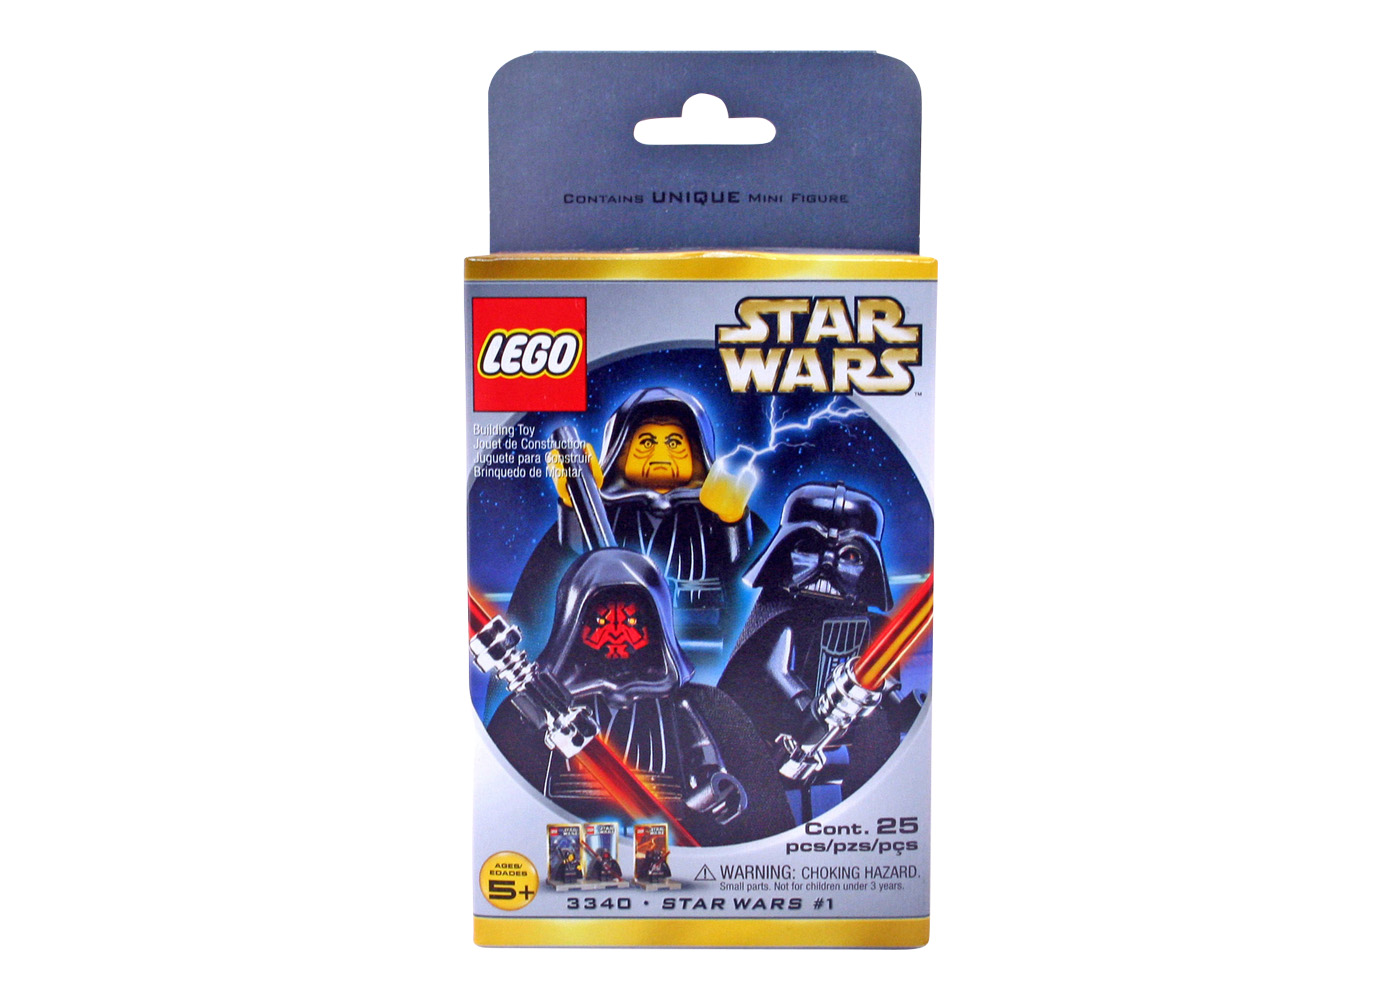 LEGO Star Wars Star Wars #1 Minifigures Set 3340 - US